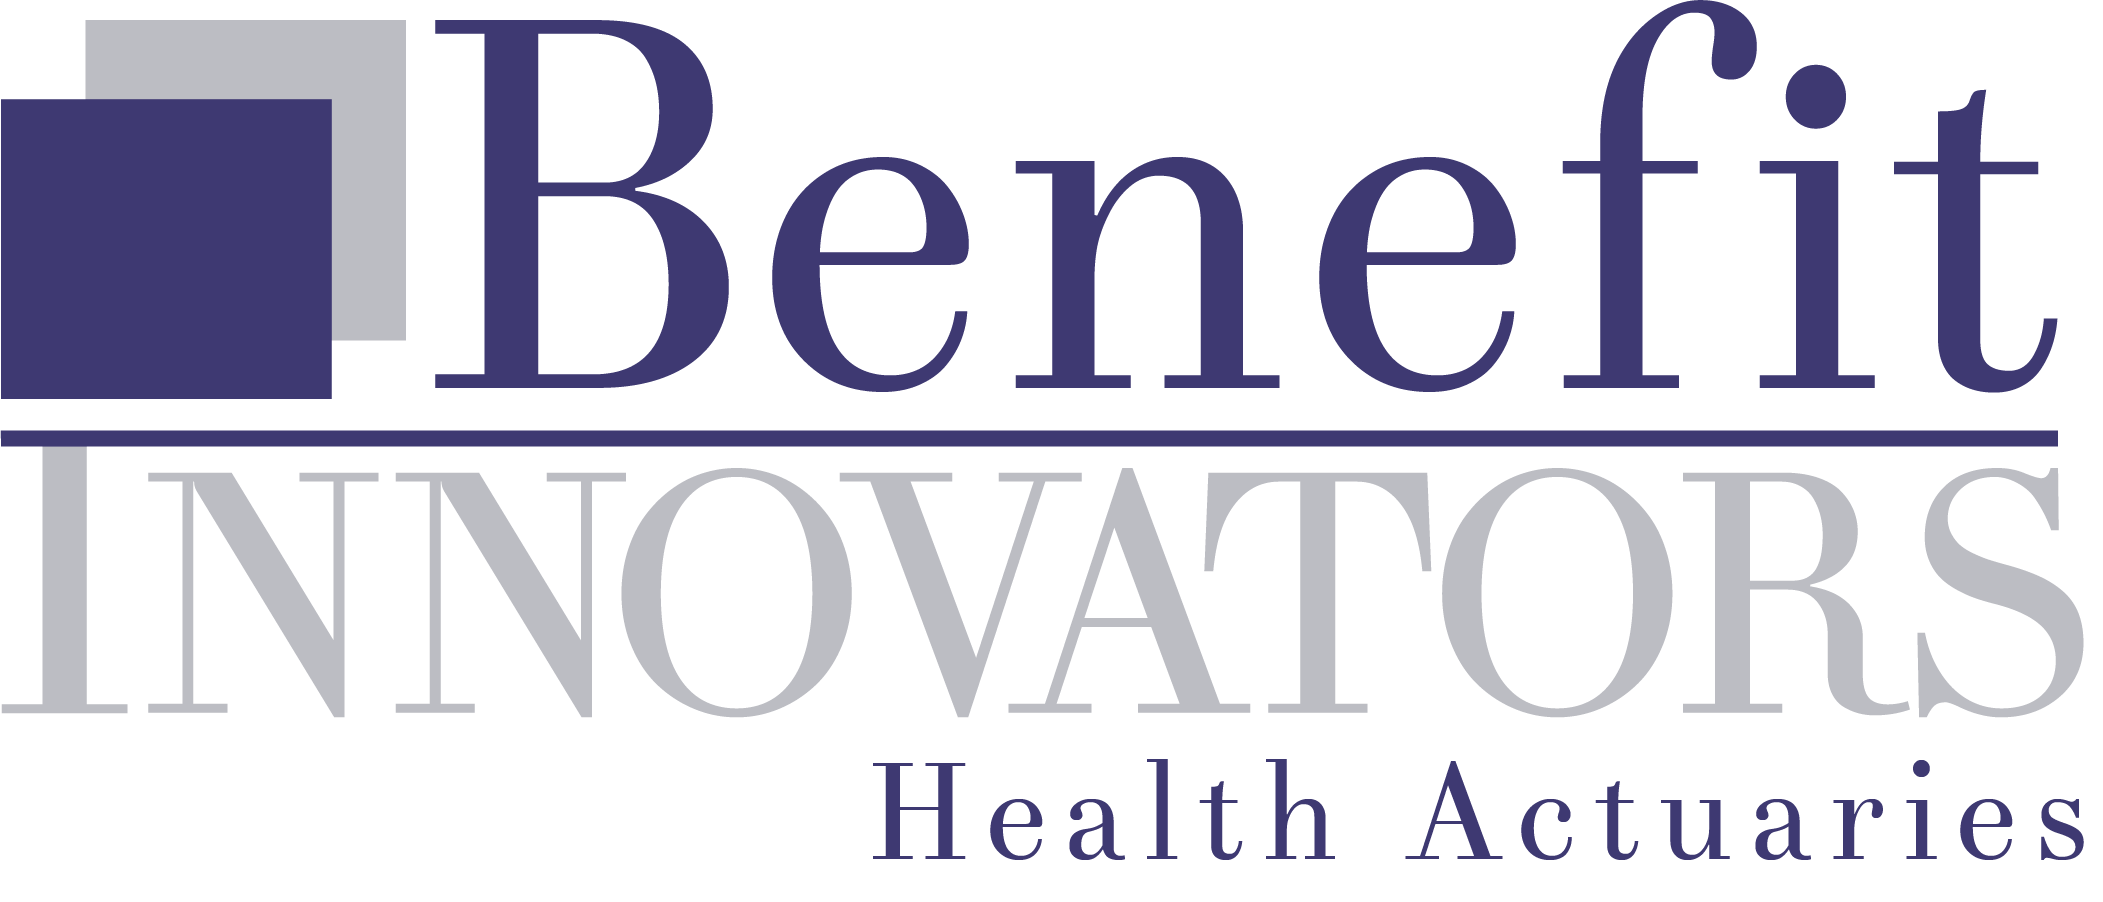 Benefit Innovators